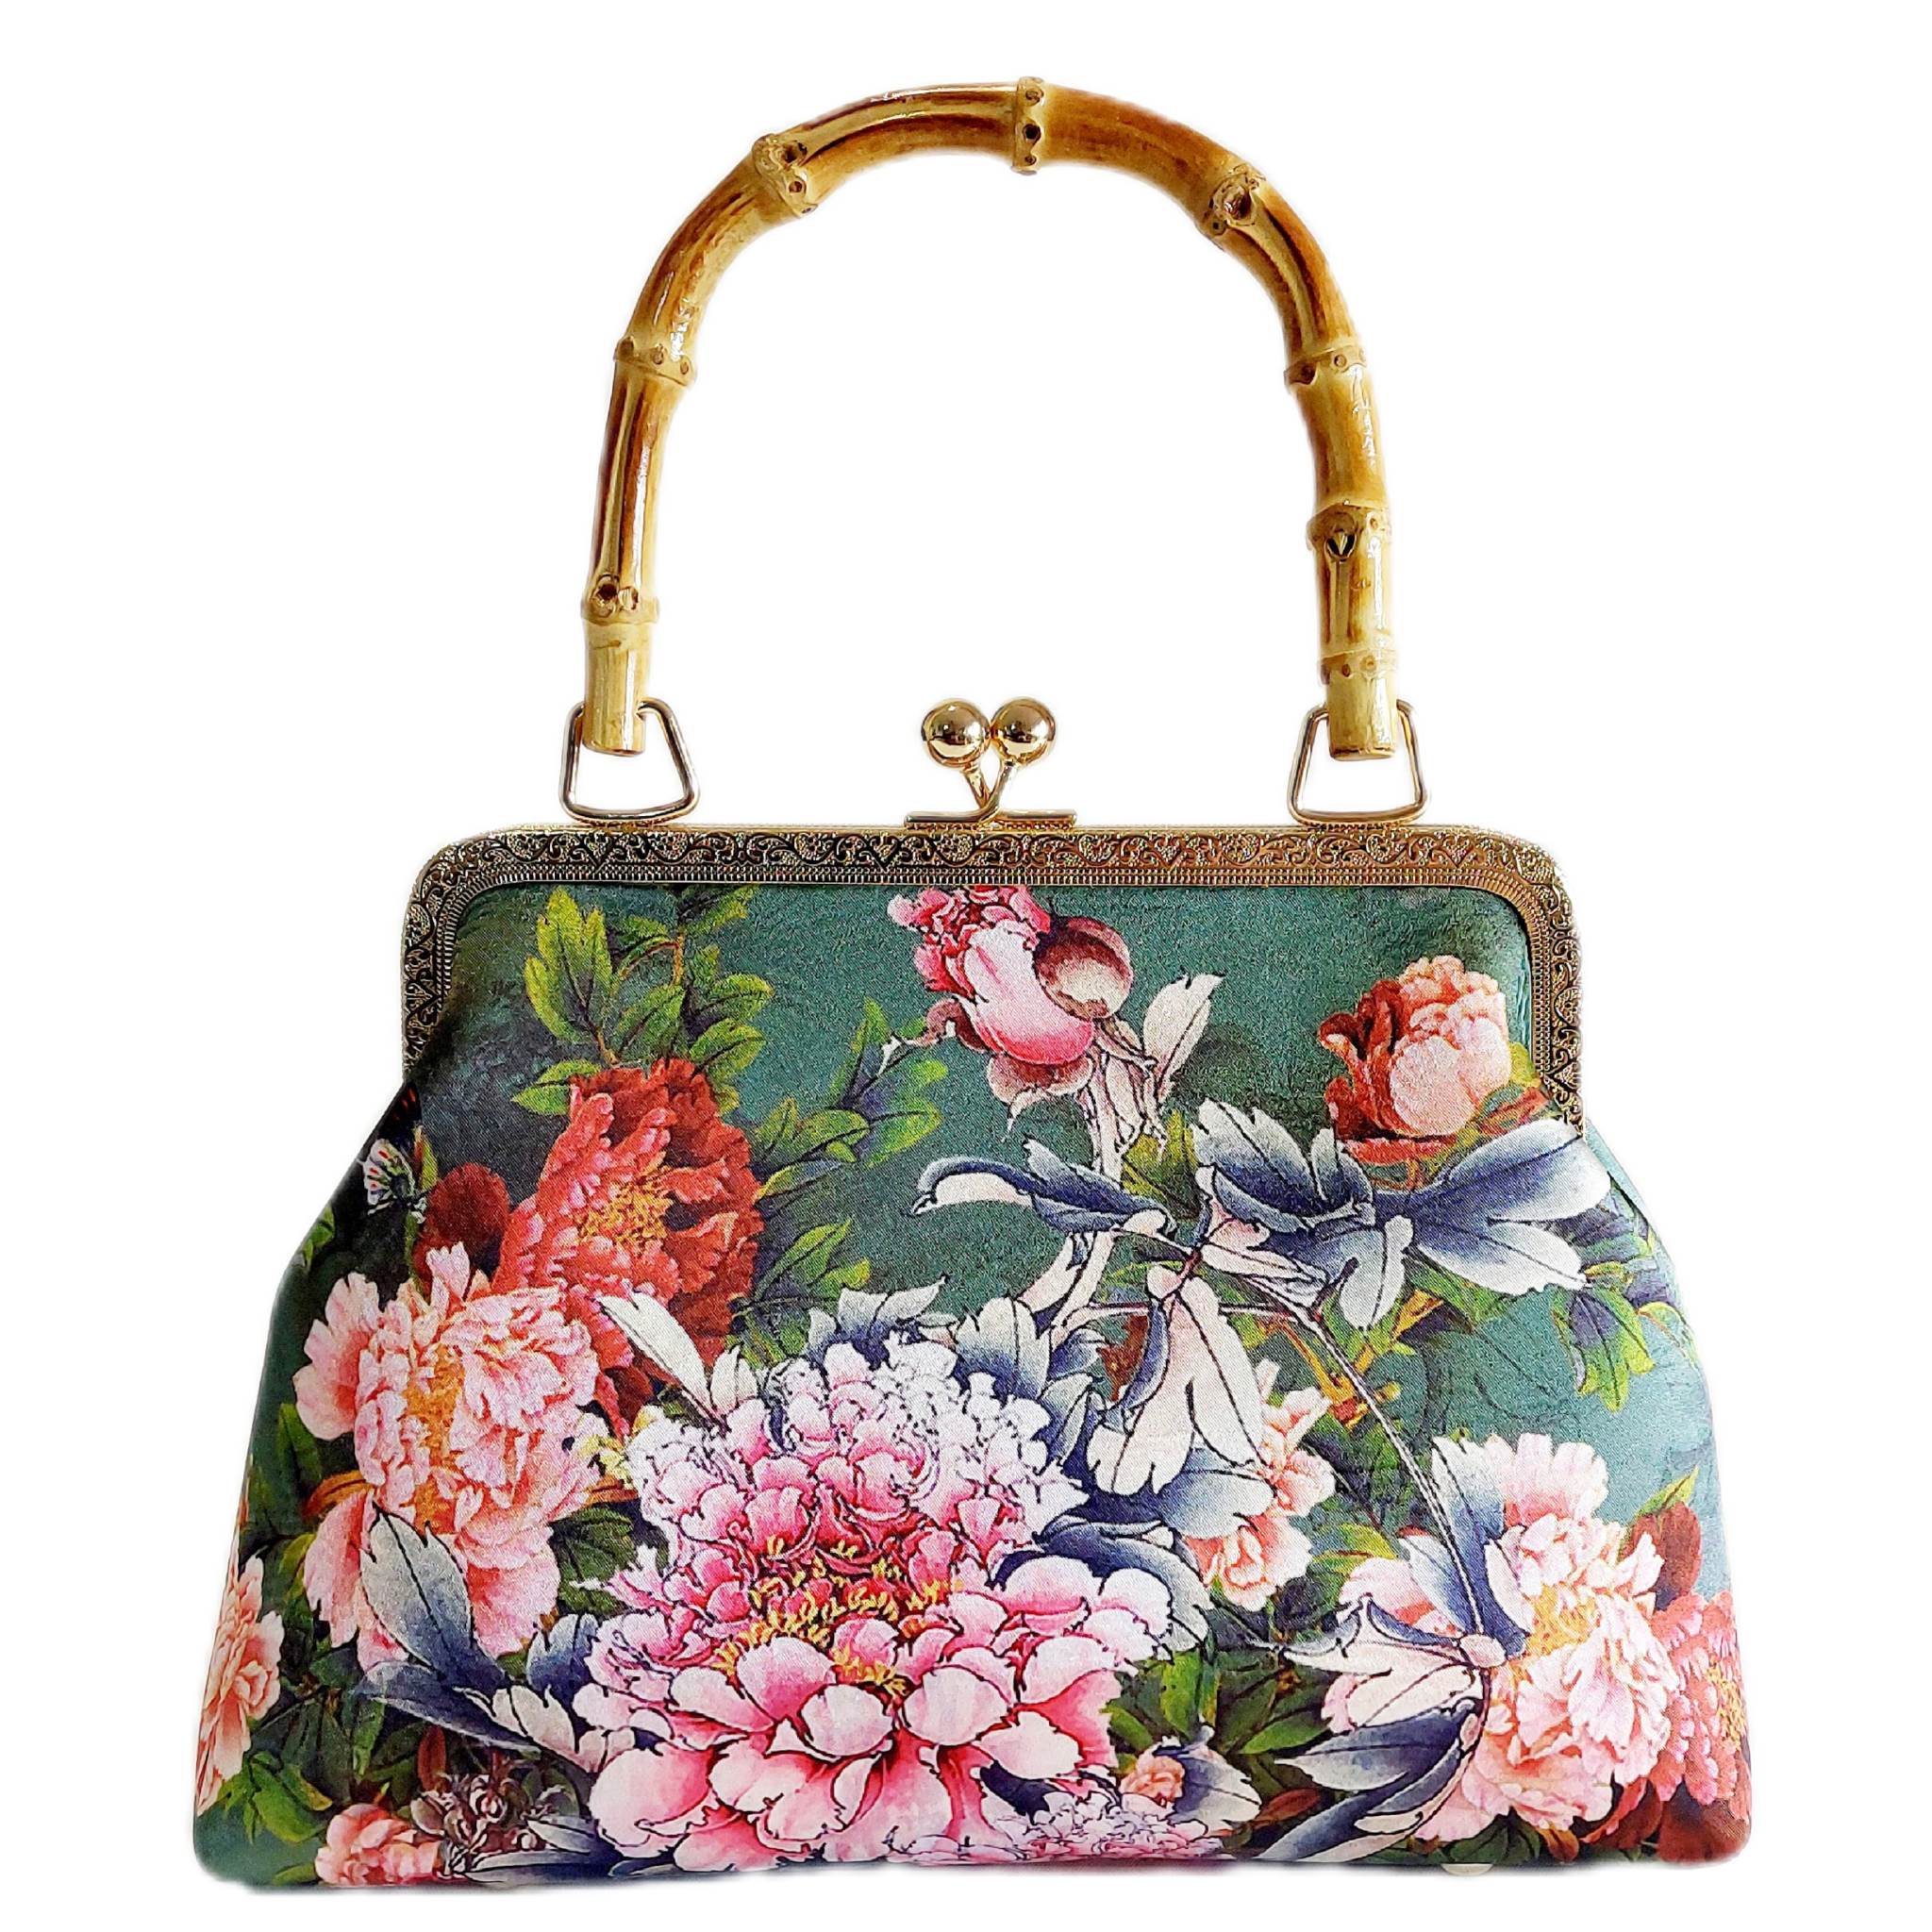 a beautiful satin floral print handbag with a bamboo handle